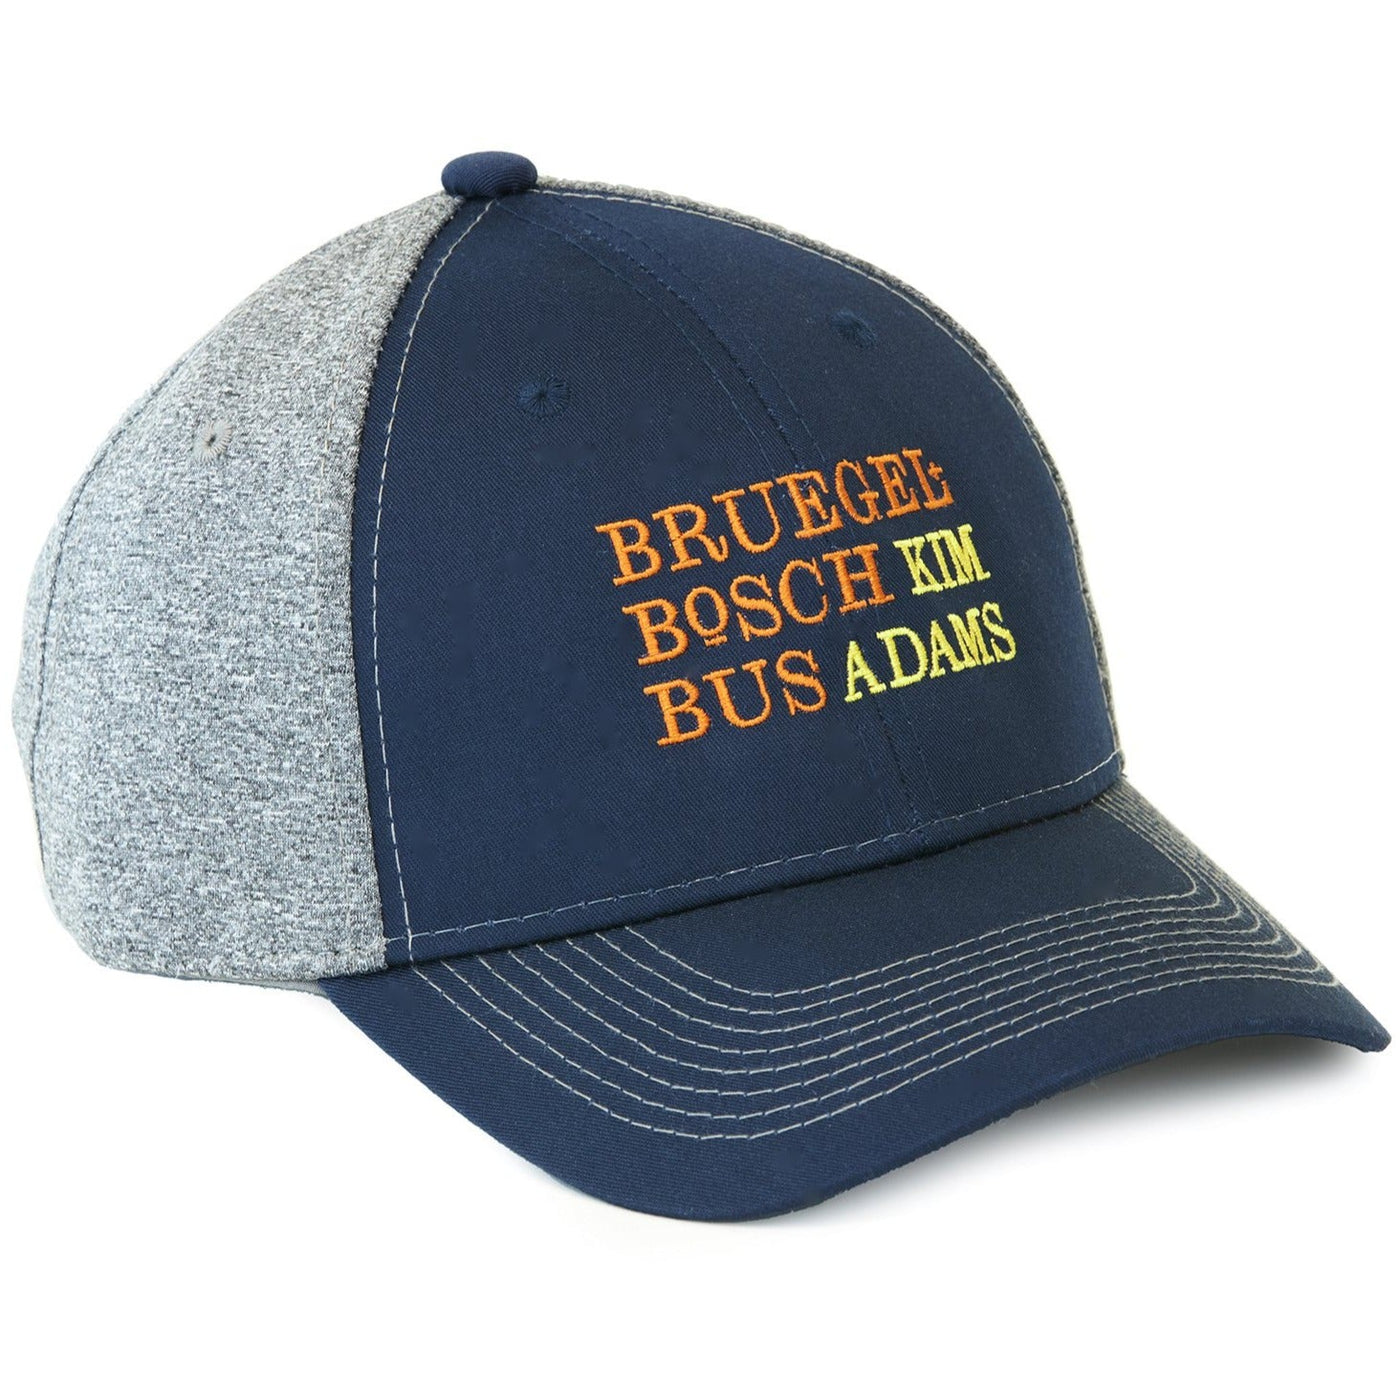 Two-Tone Navy Bruegel-Bosch Bus Hat